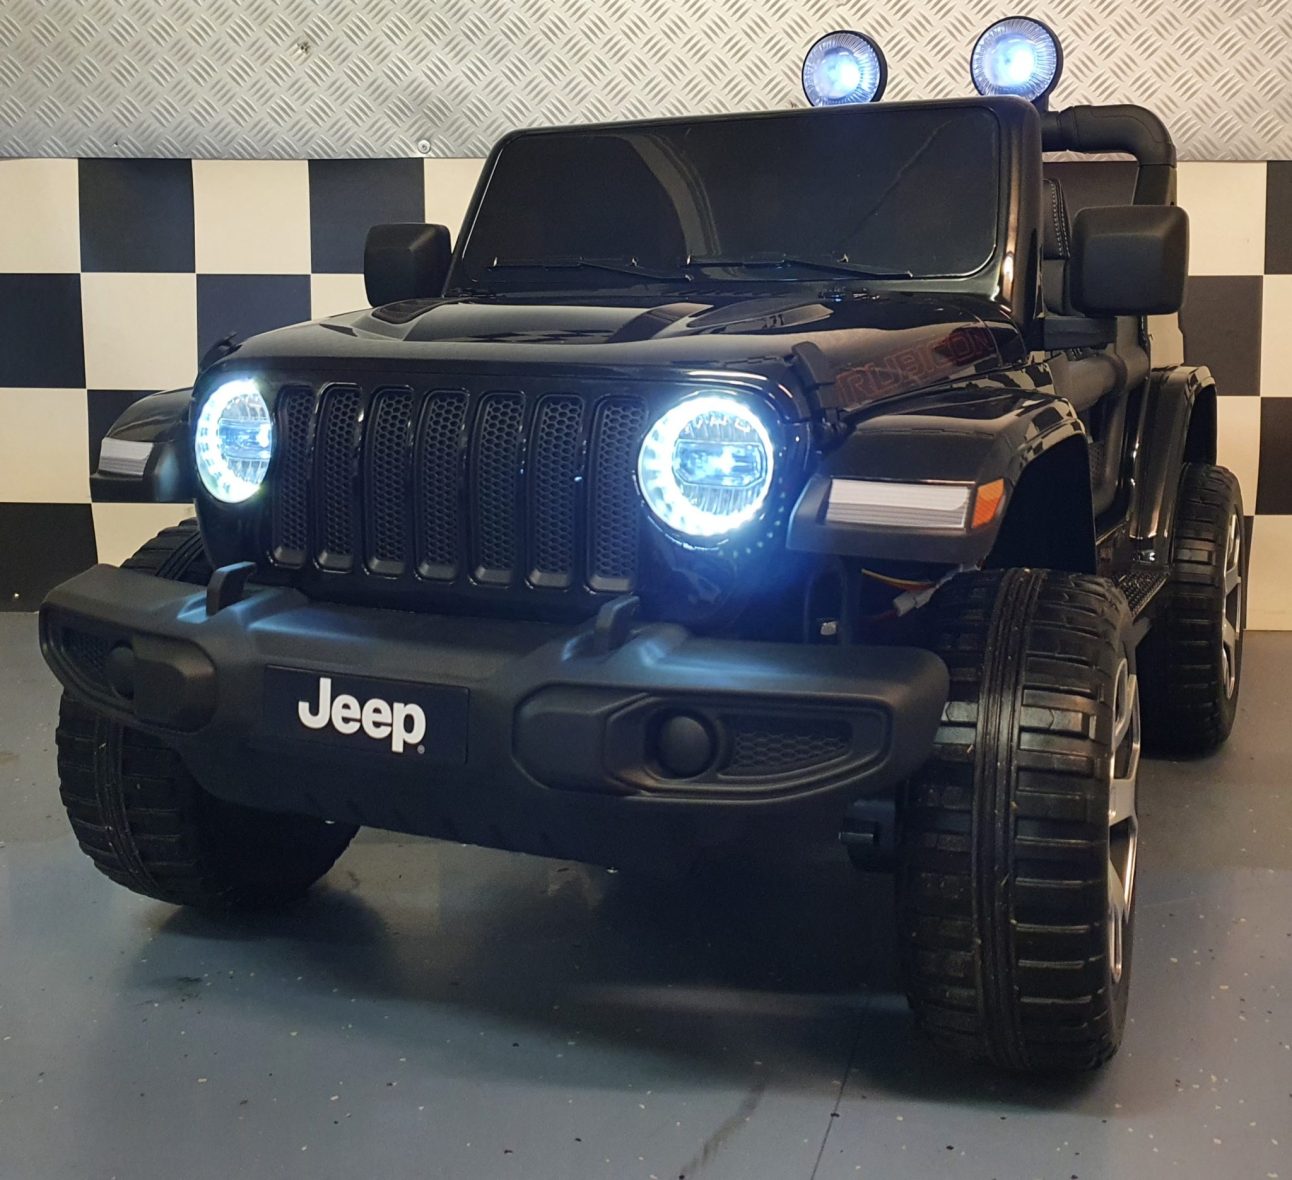 Jeep Wrangler Battery Children’s Car 12 Volt 4 Wheel Drive Remote Control Black